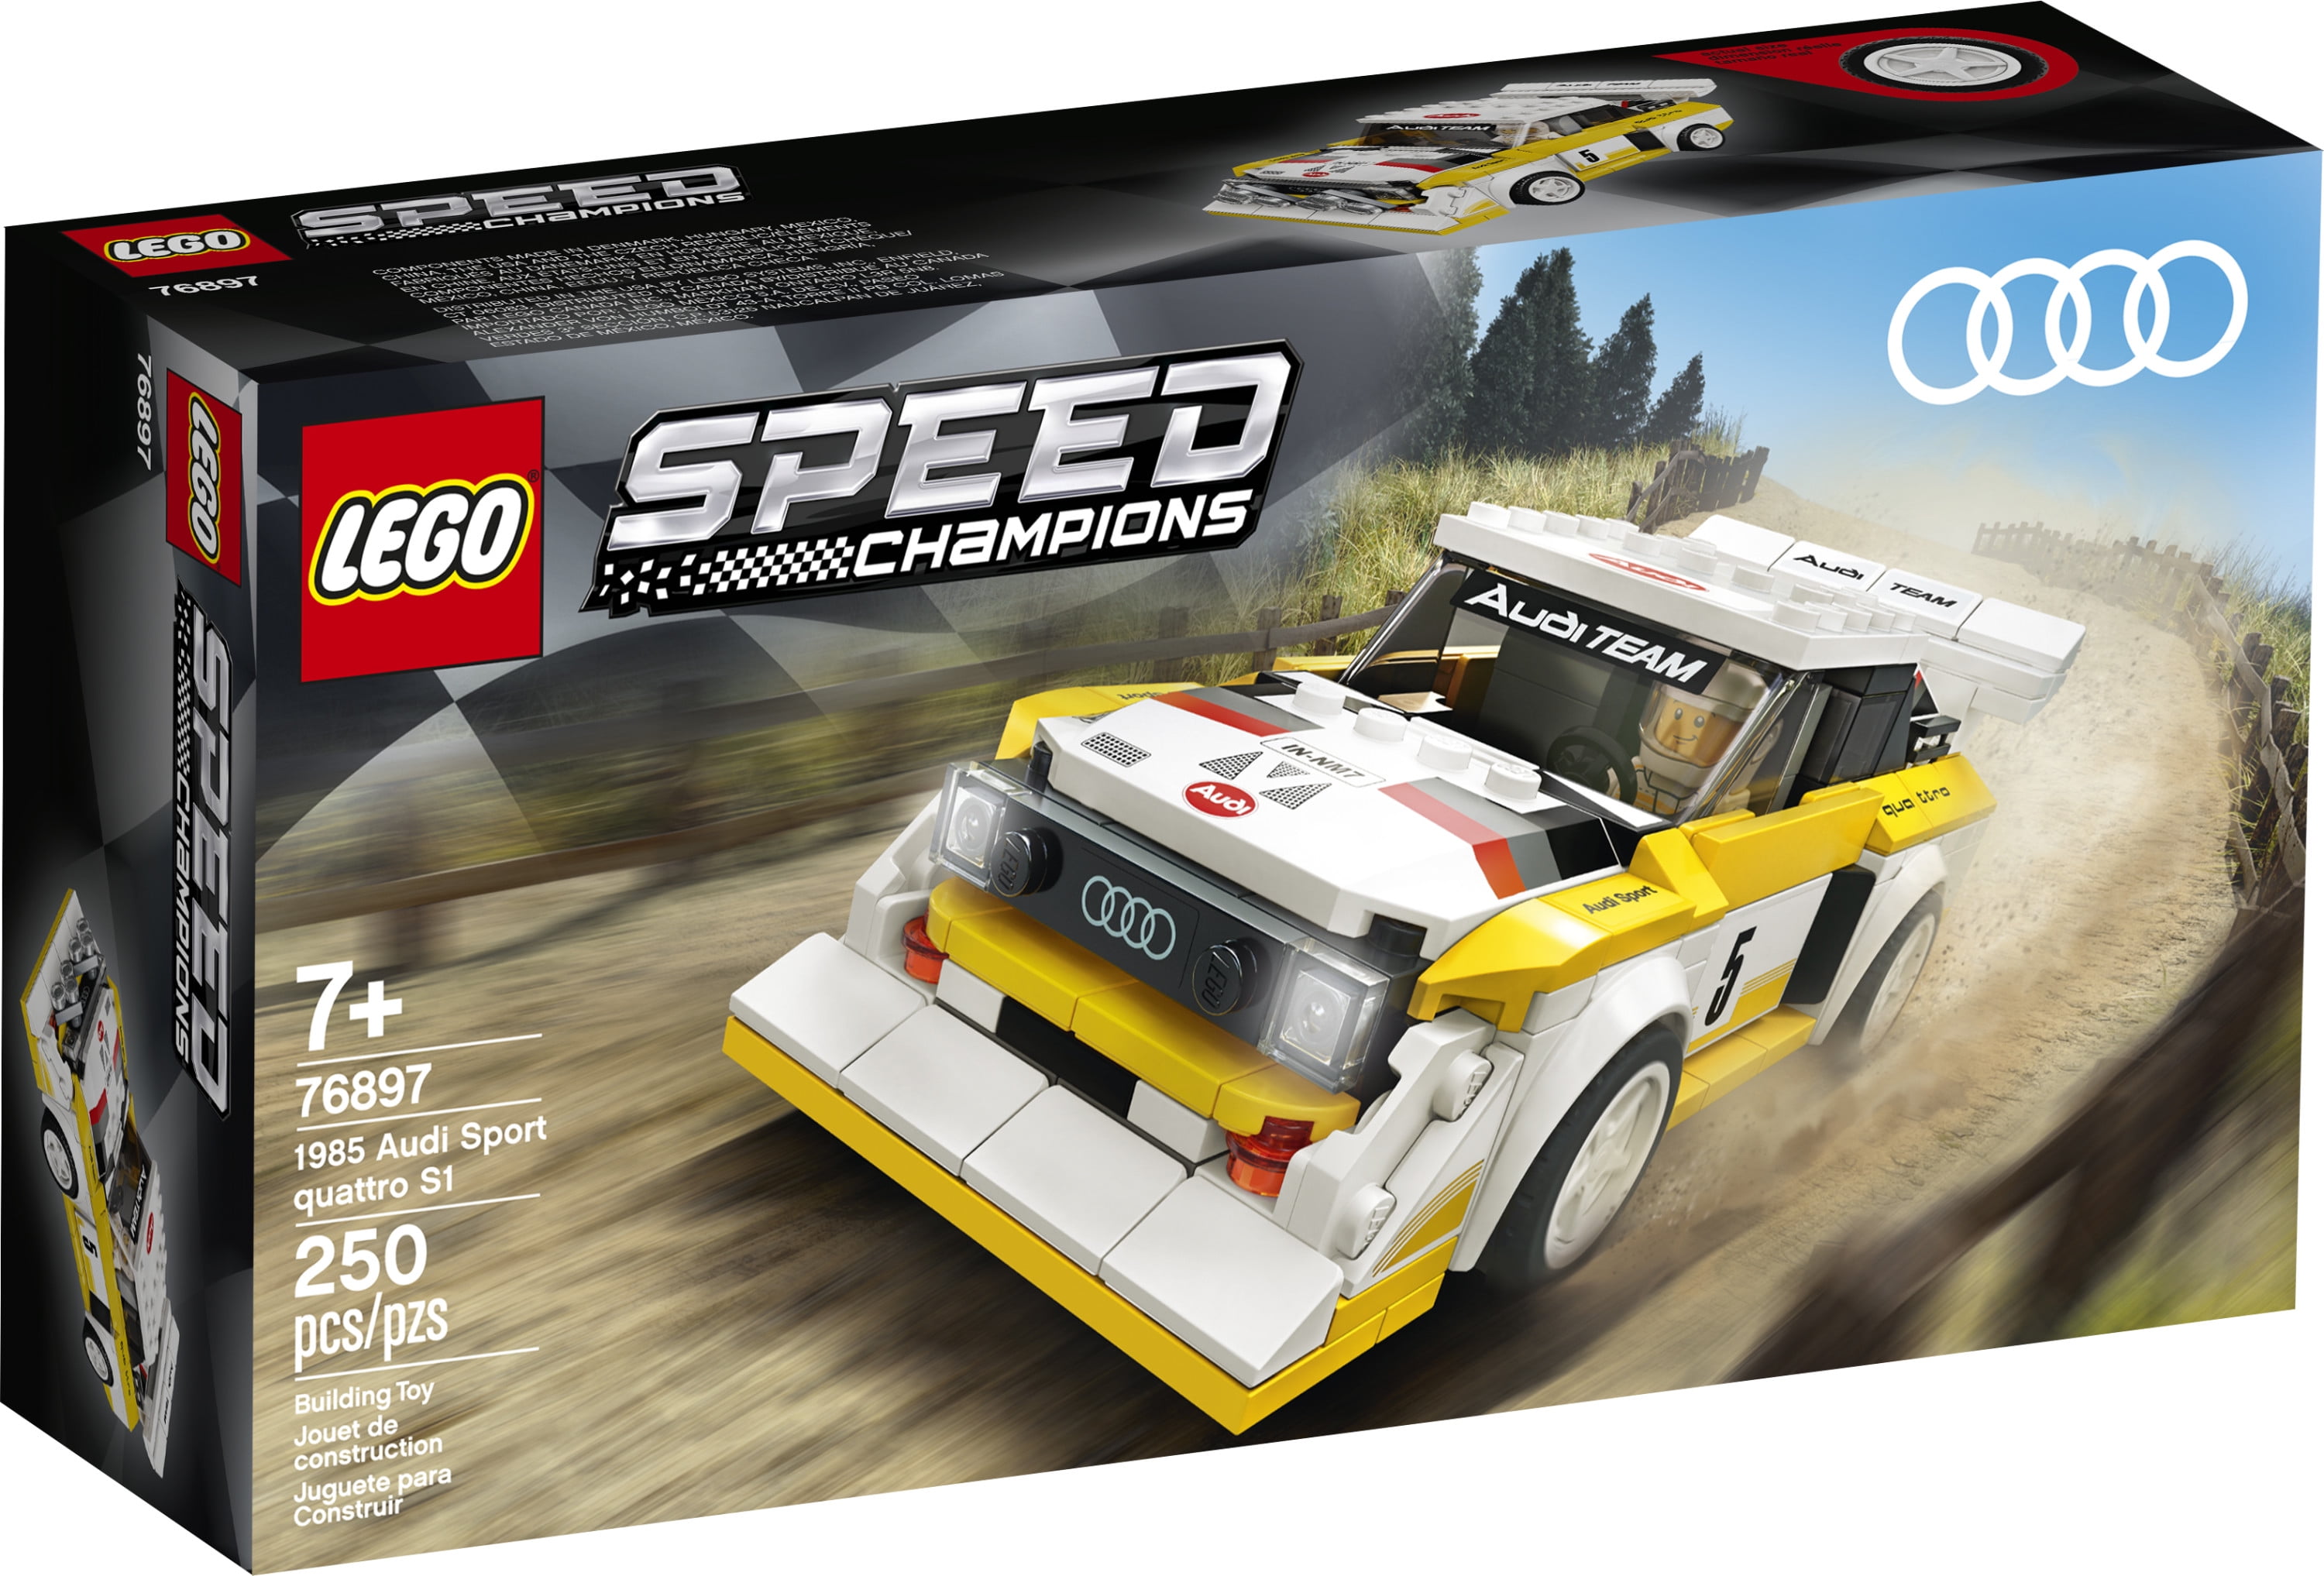 LEGO Speed Champions 1985 Audi quattro S1 76897 Toy Car Building (250 Pieces) - Walmart.com